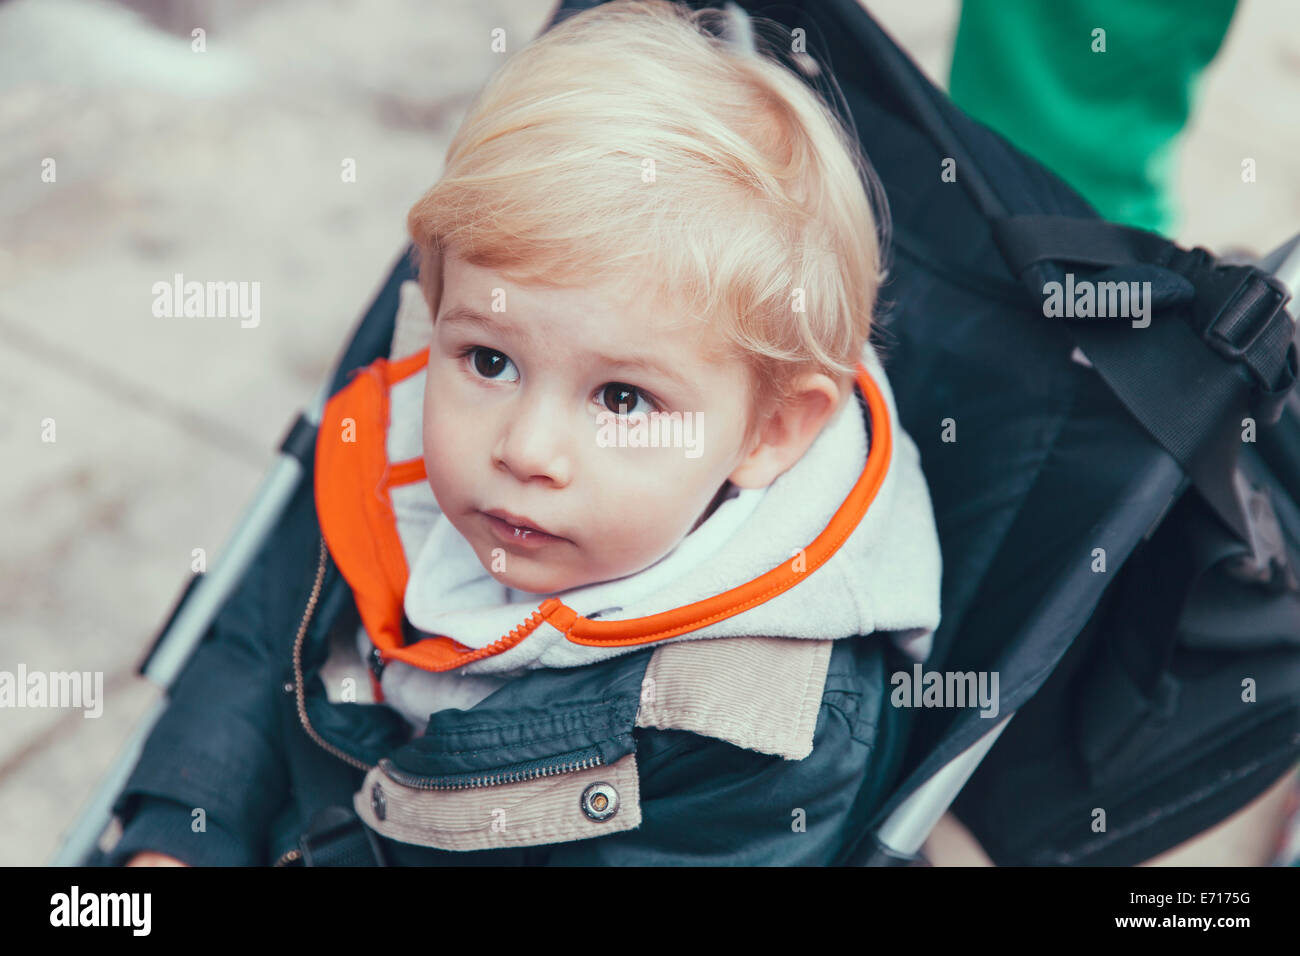 Italy, Sicily, Palermo, Blond boy in stroller Stock Photo